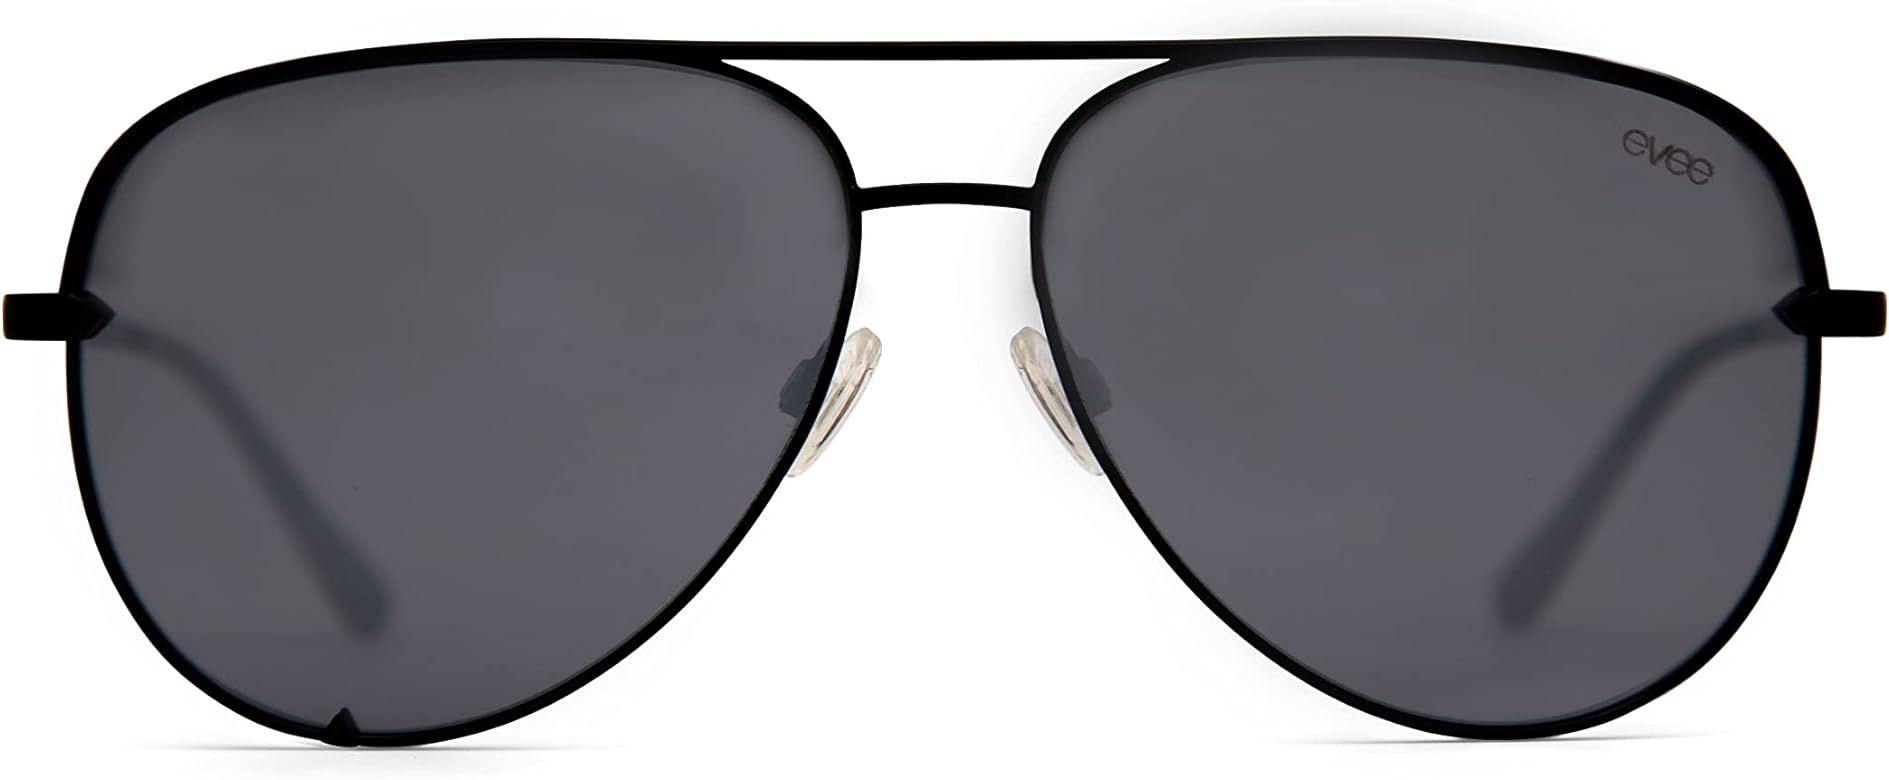 EVEE Fashionable Metal Aviator Sunglasses with Oversize Flat Reflective Mirror Lenses (GEMINI) | Amazon (US)